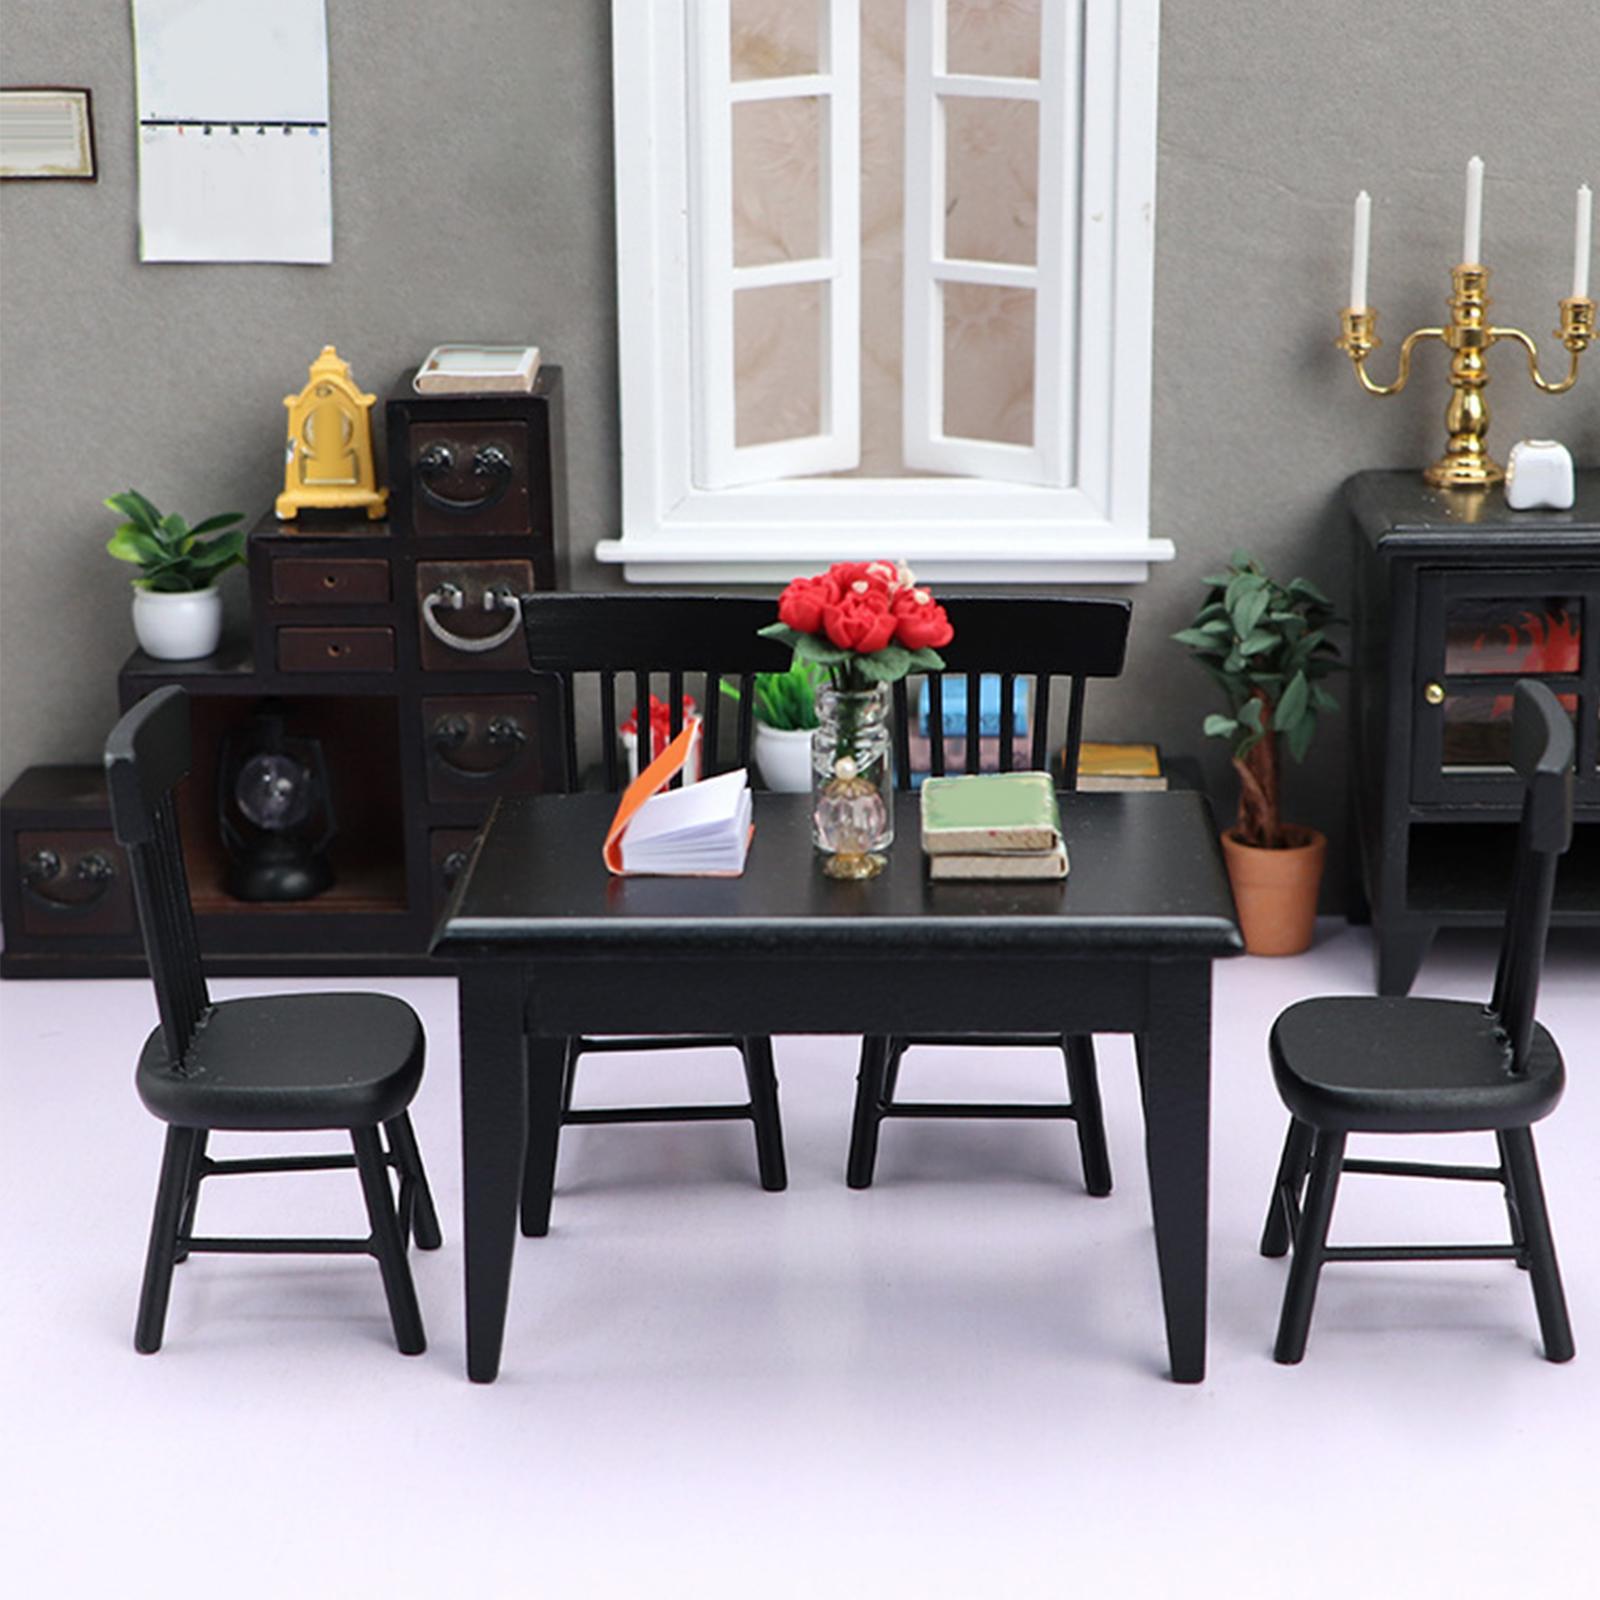 Simulation Dollhouse Miniature Table Chairs  Furniture